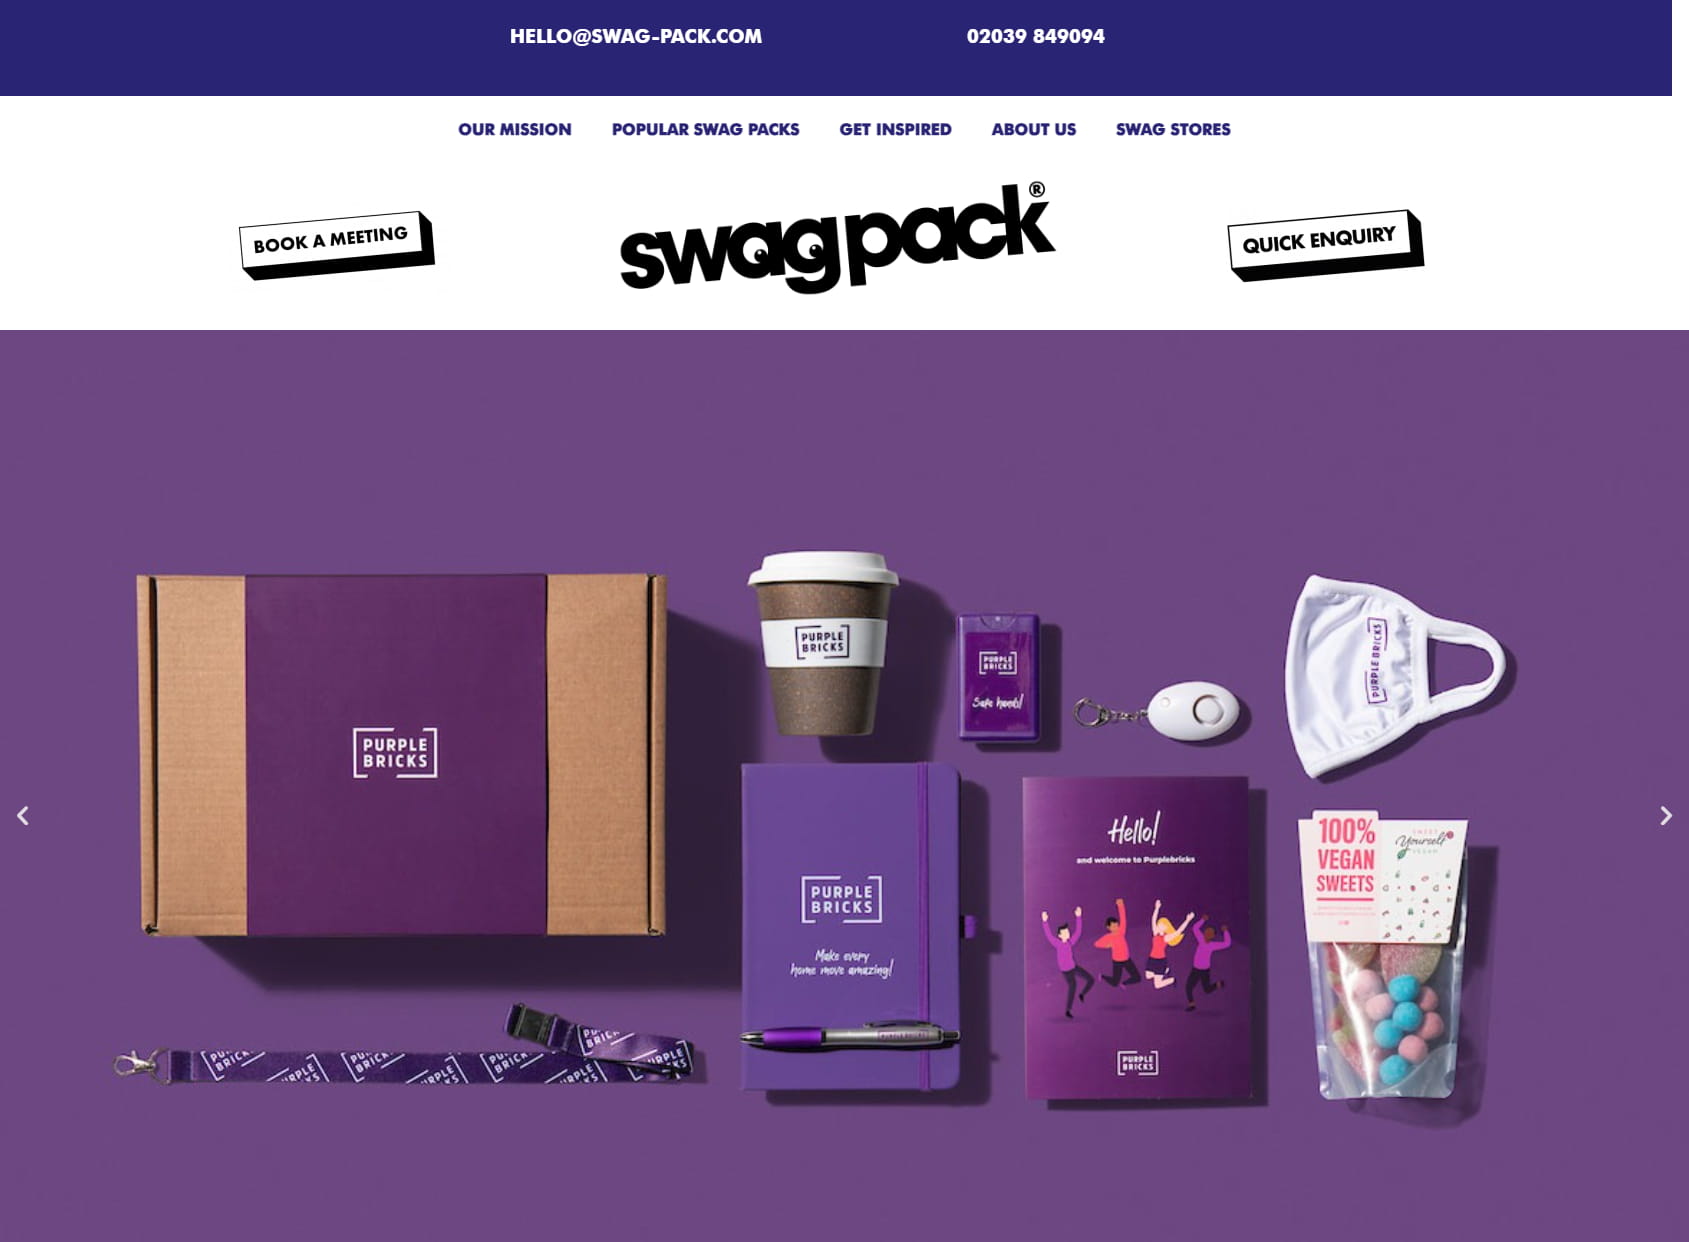 Swag Pack Ltd